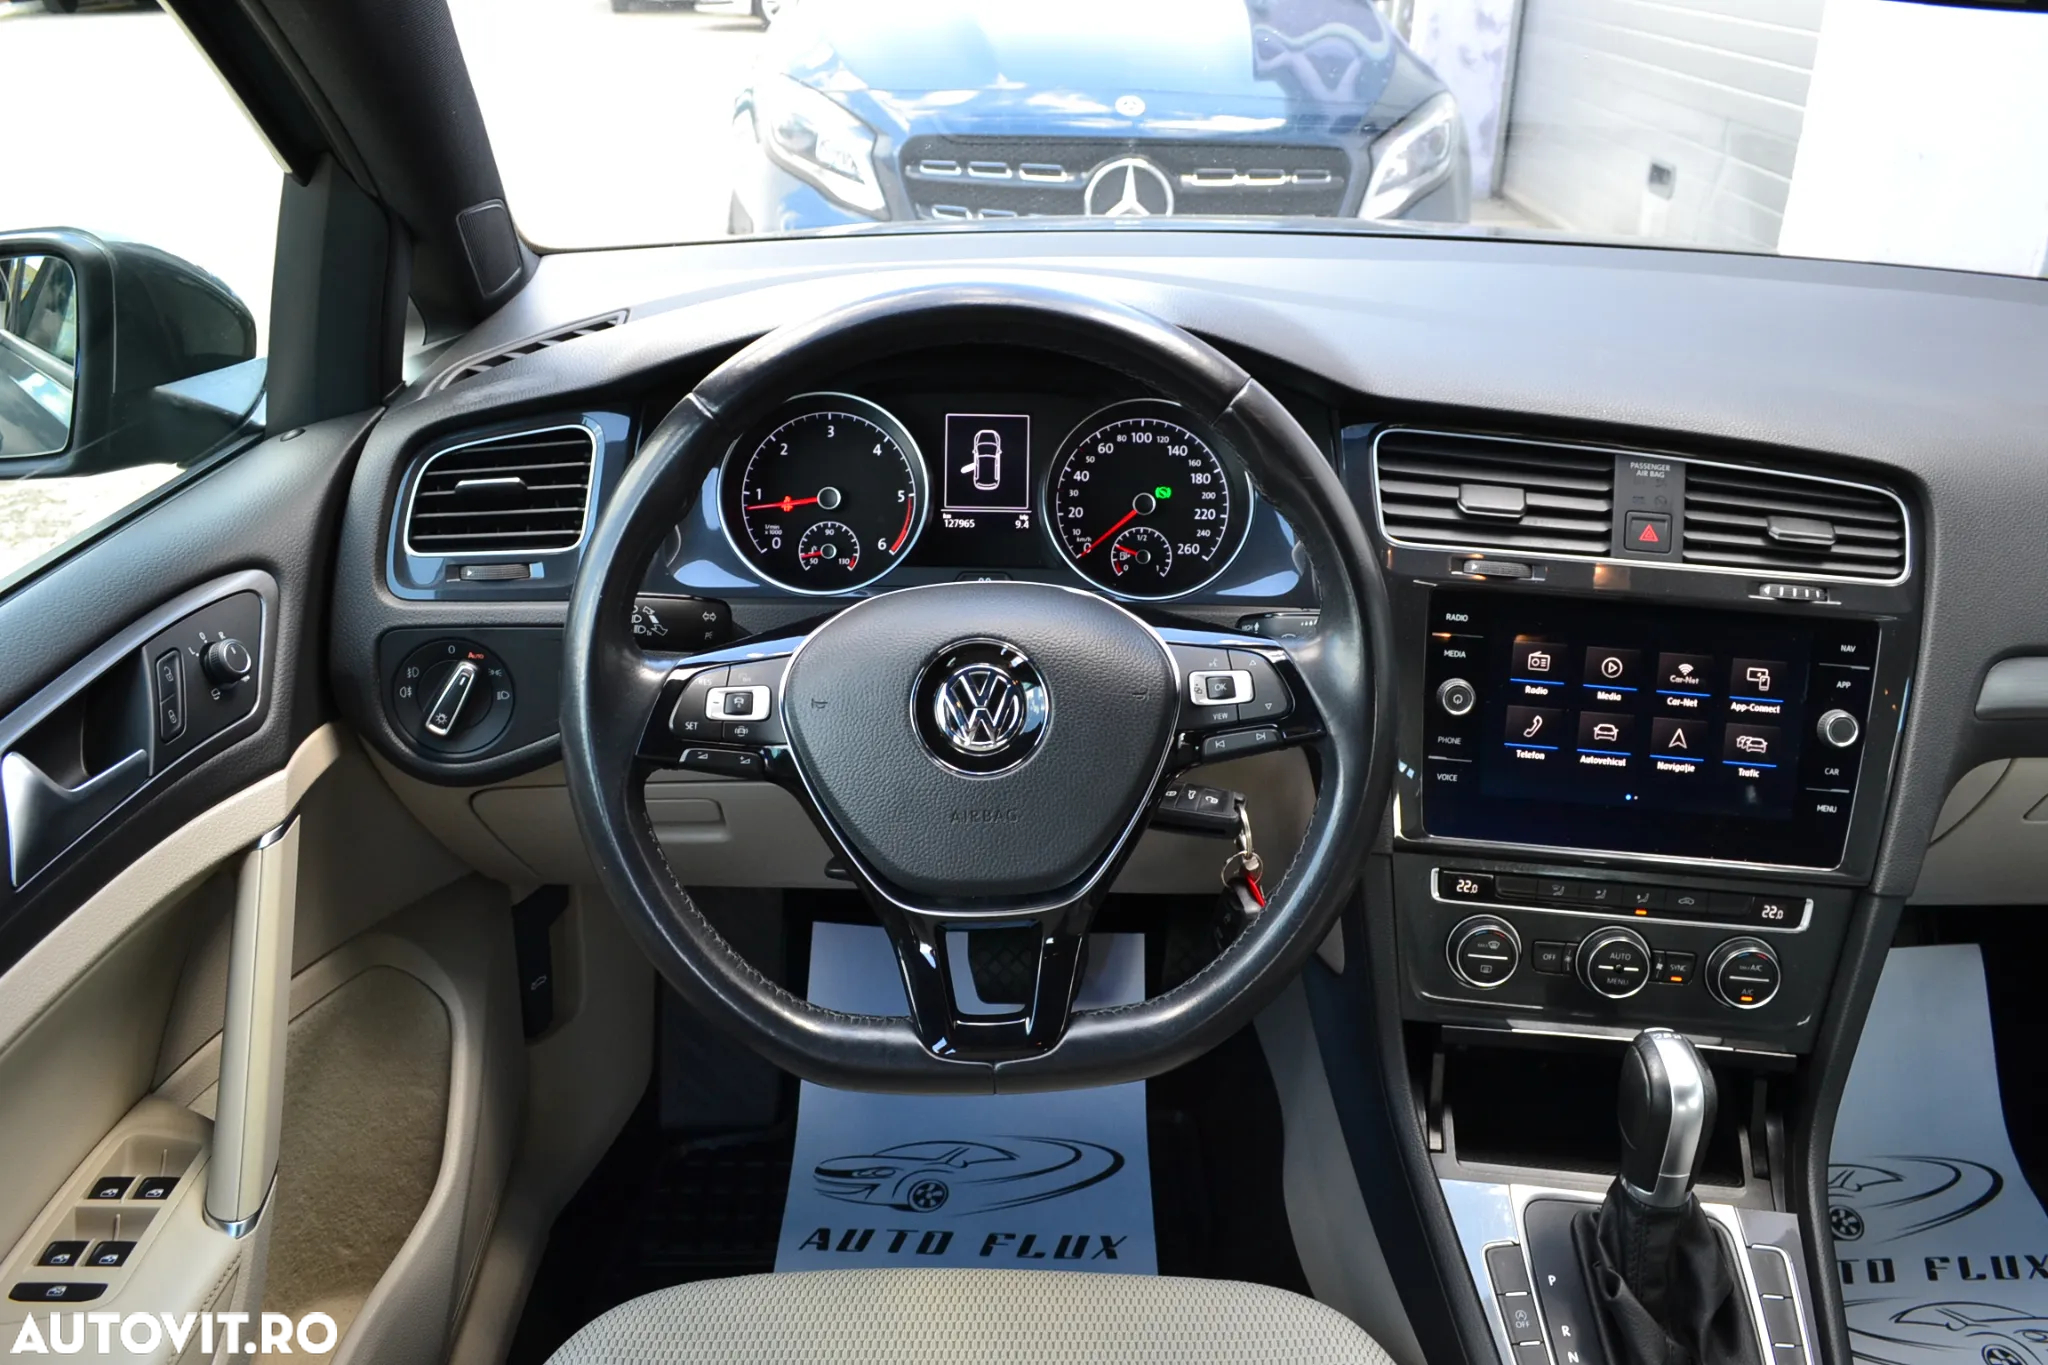 Volkswagen Golf 1.6 TDI (BlueMotion Technology) DSG Comfortline - 31